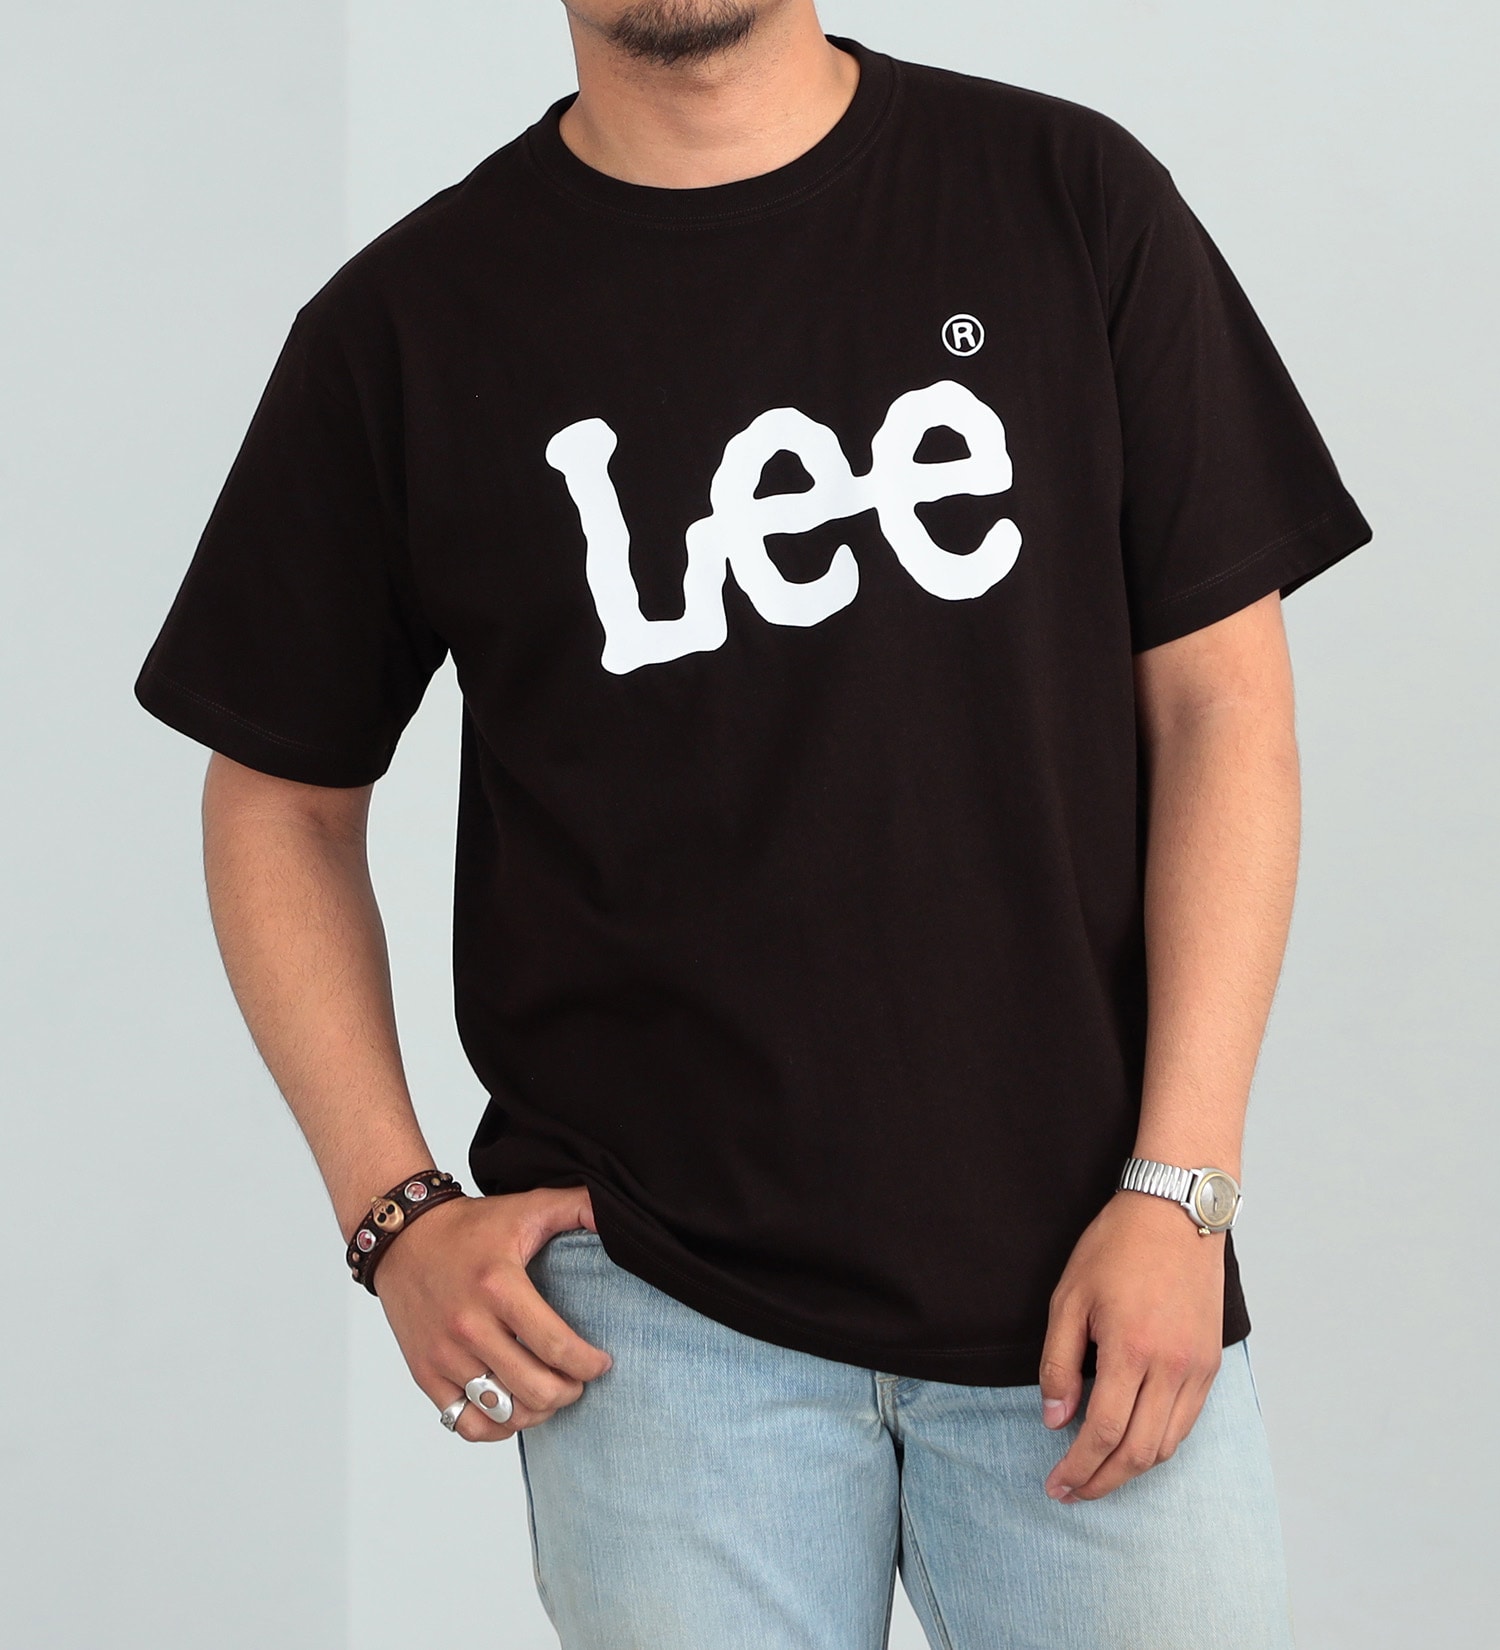 Lee(リー)の【FINAL SALE】Lee ロゴ ショートスリーブTee|トップス/Tシャツ/カットソー/メンズ|ブラック